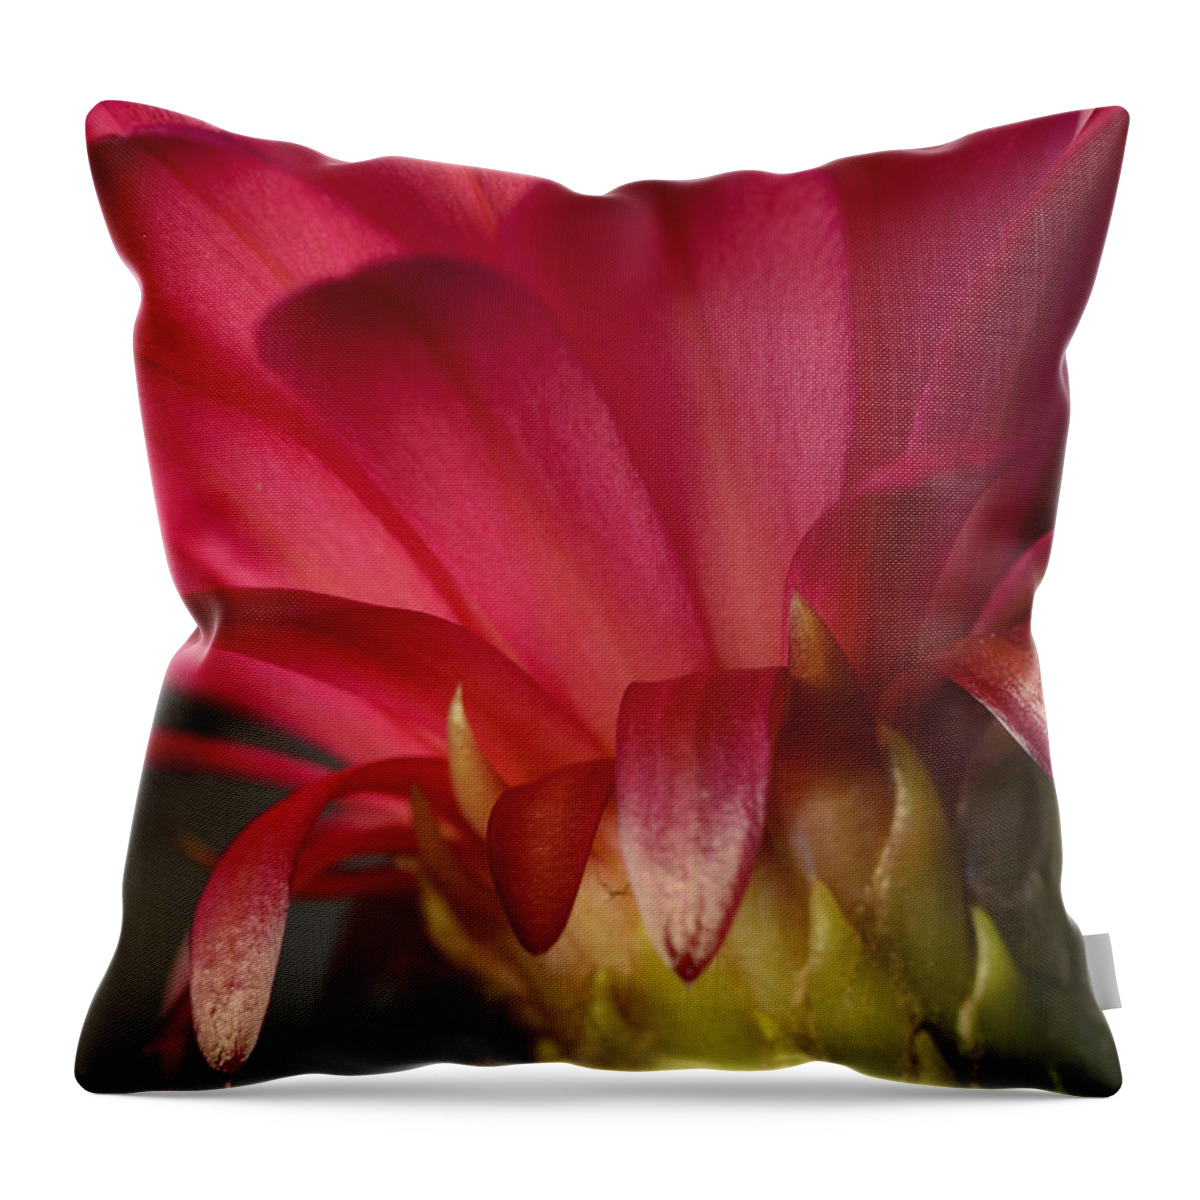 Pink Cactus Flower Throw Pillow featuring the photograph Hot Pink Cactus Flower by Tamara Becker